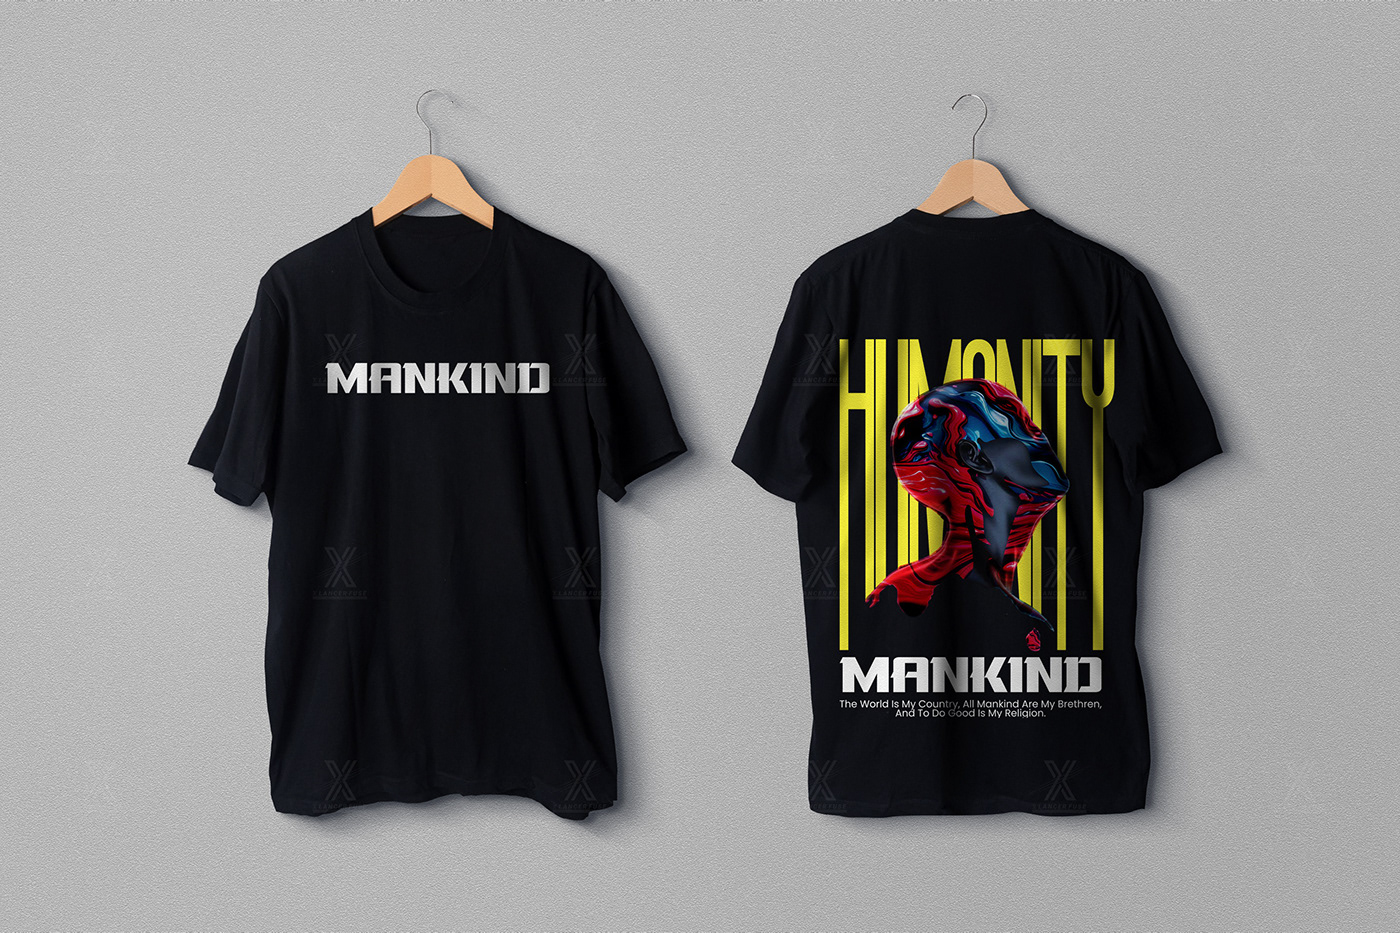 Humanity T-shirt Design